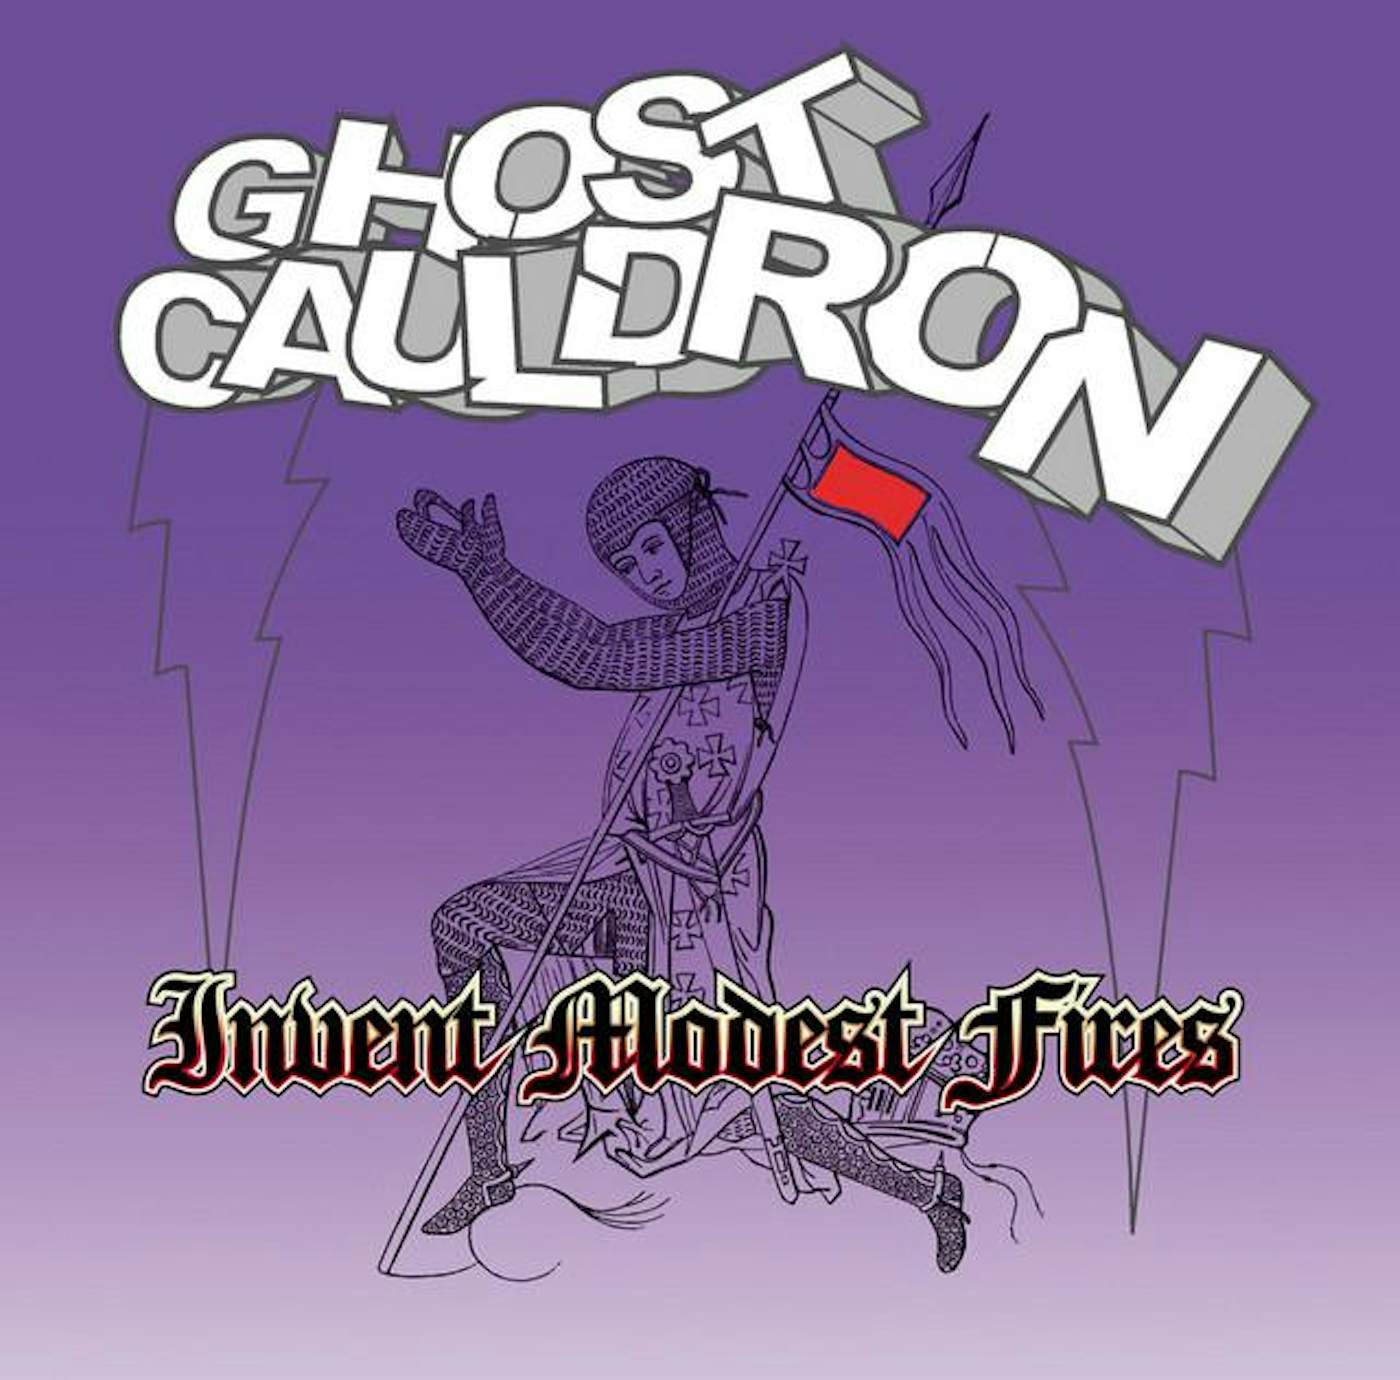 Ghost Cauldron